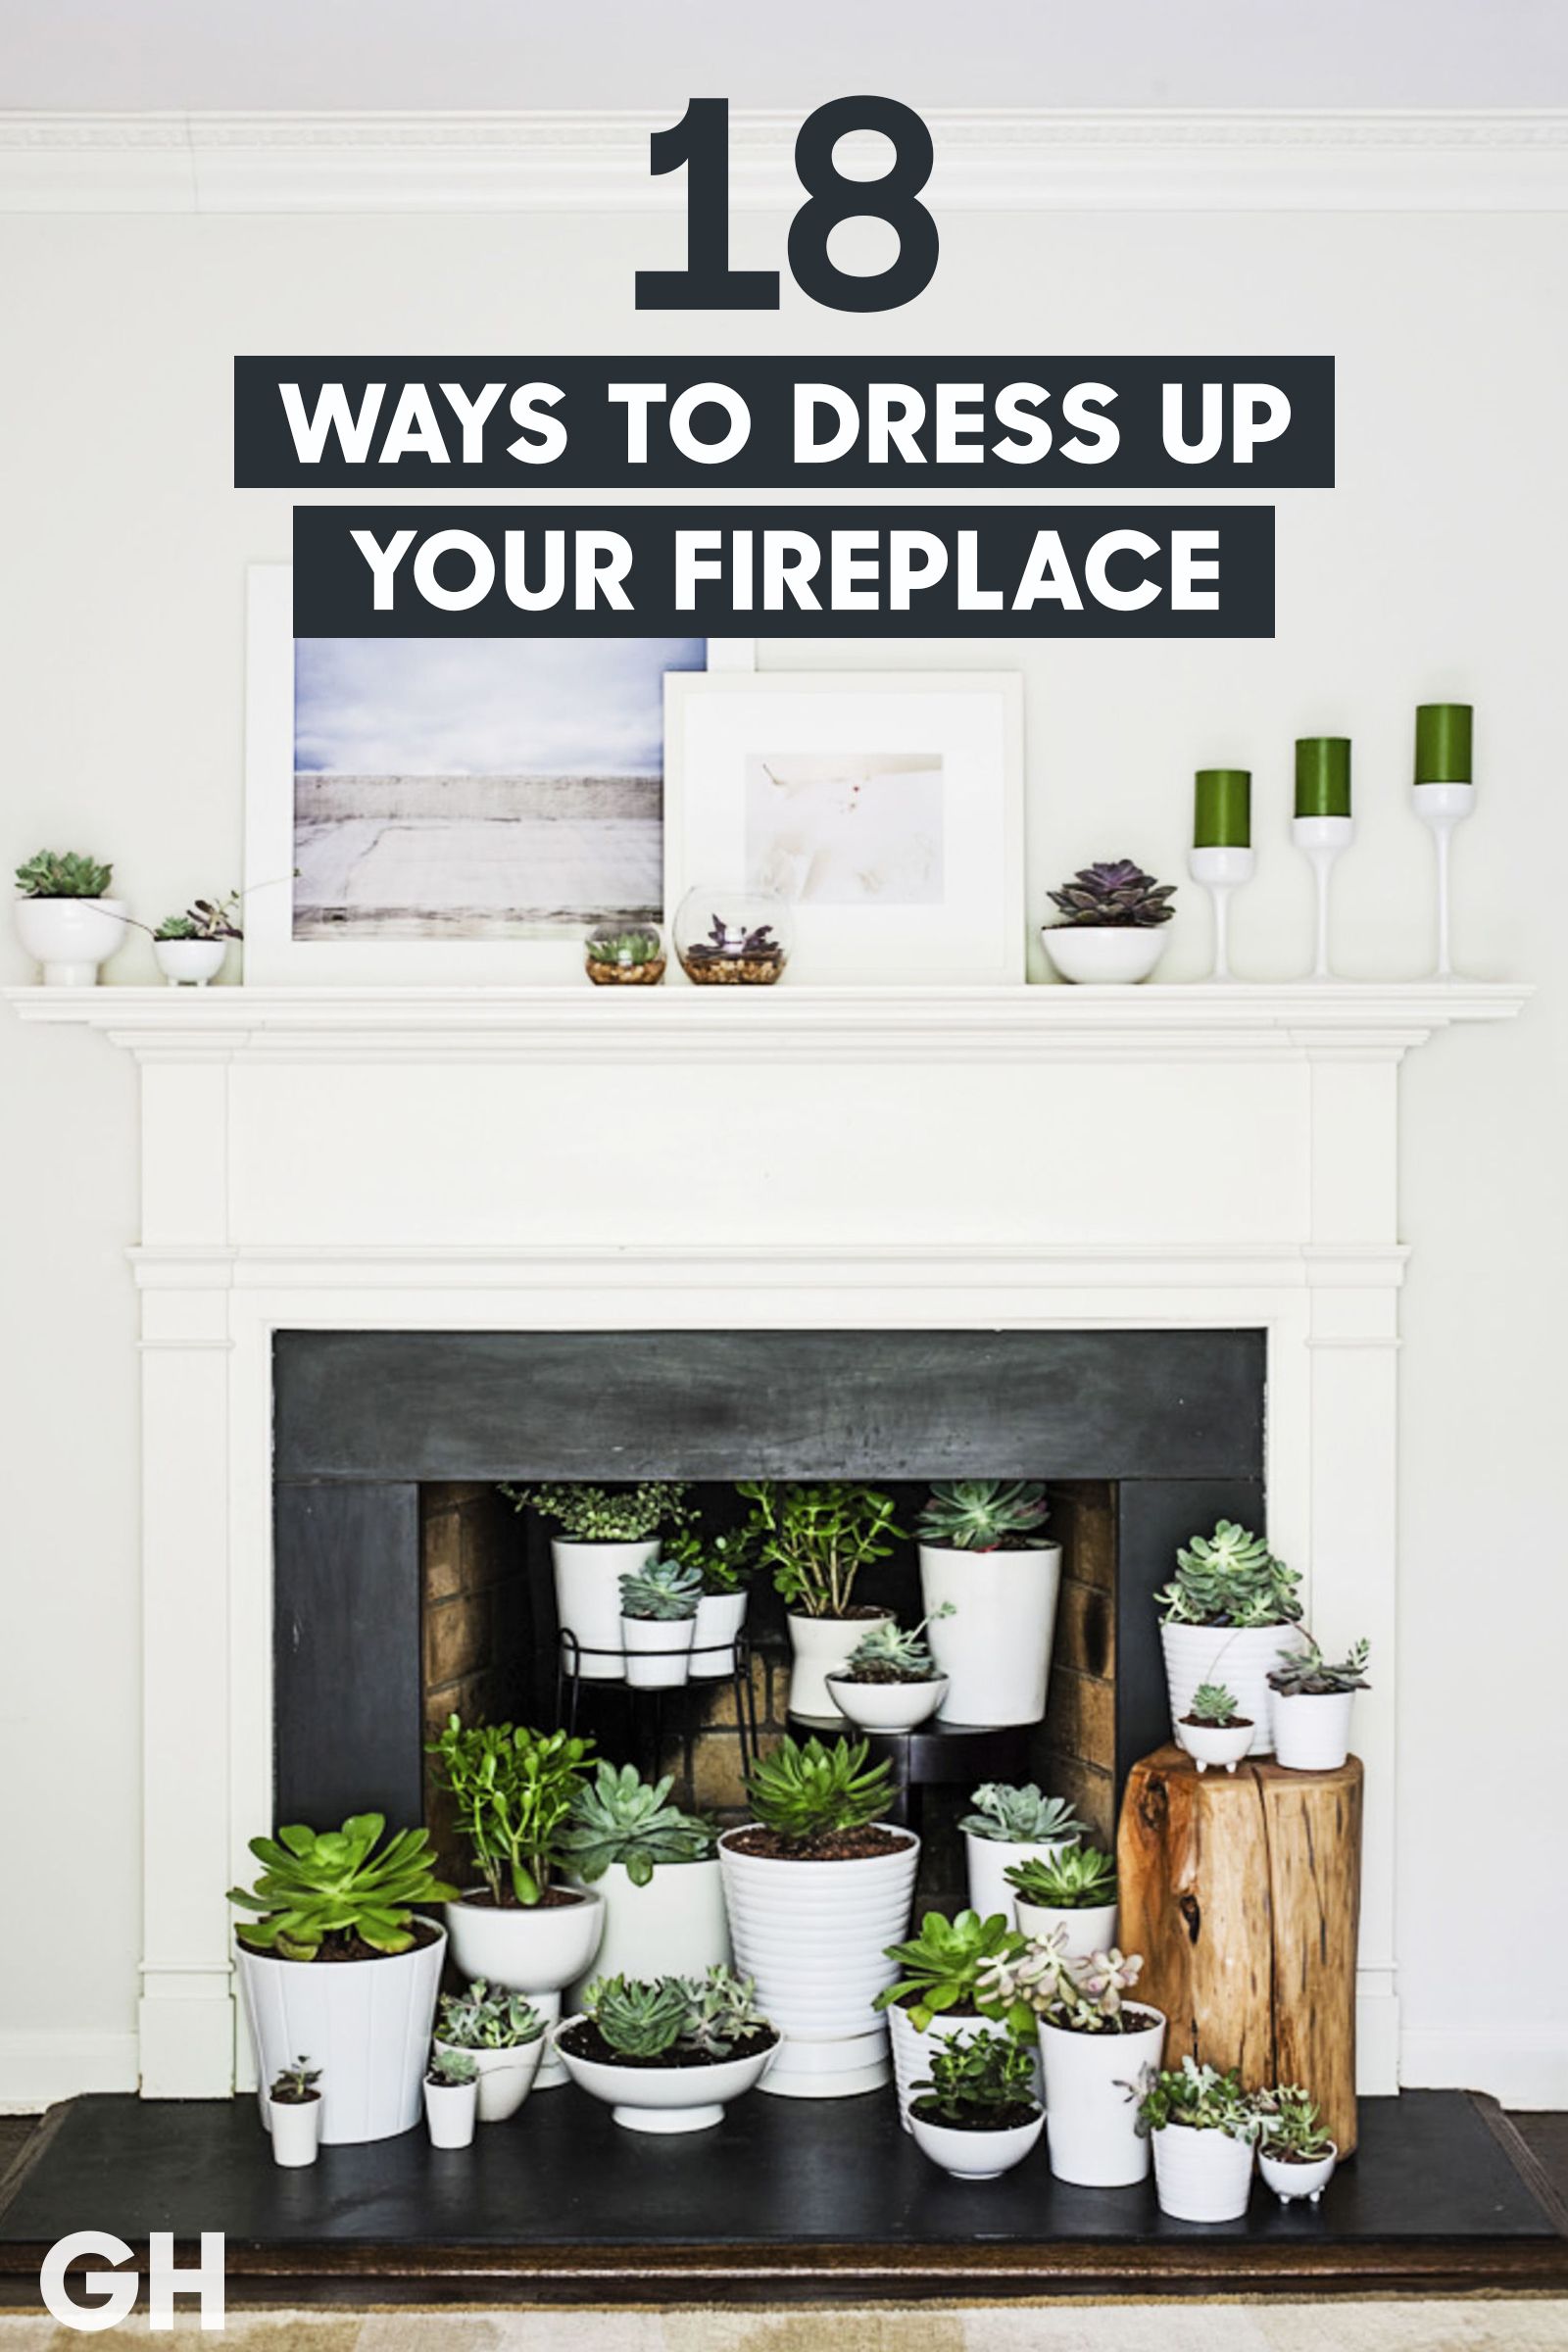 18 ways to dress up fireplace